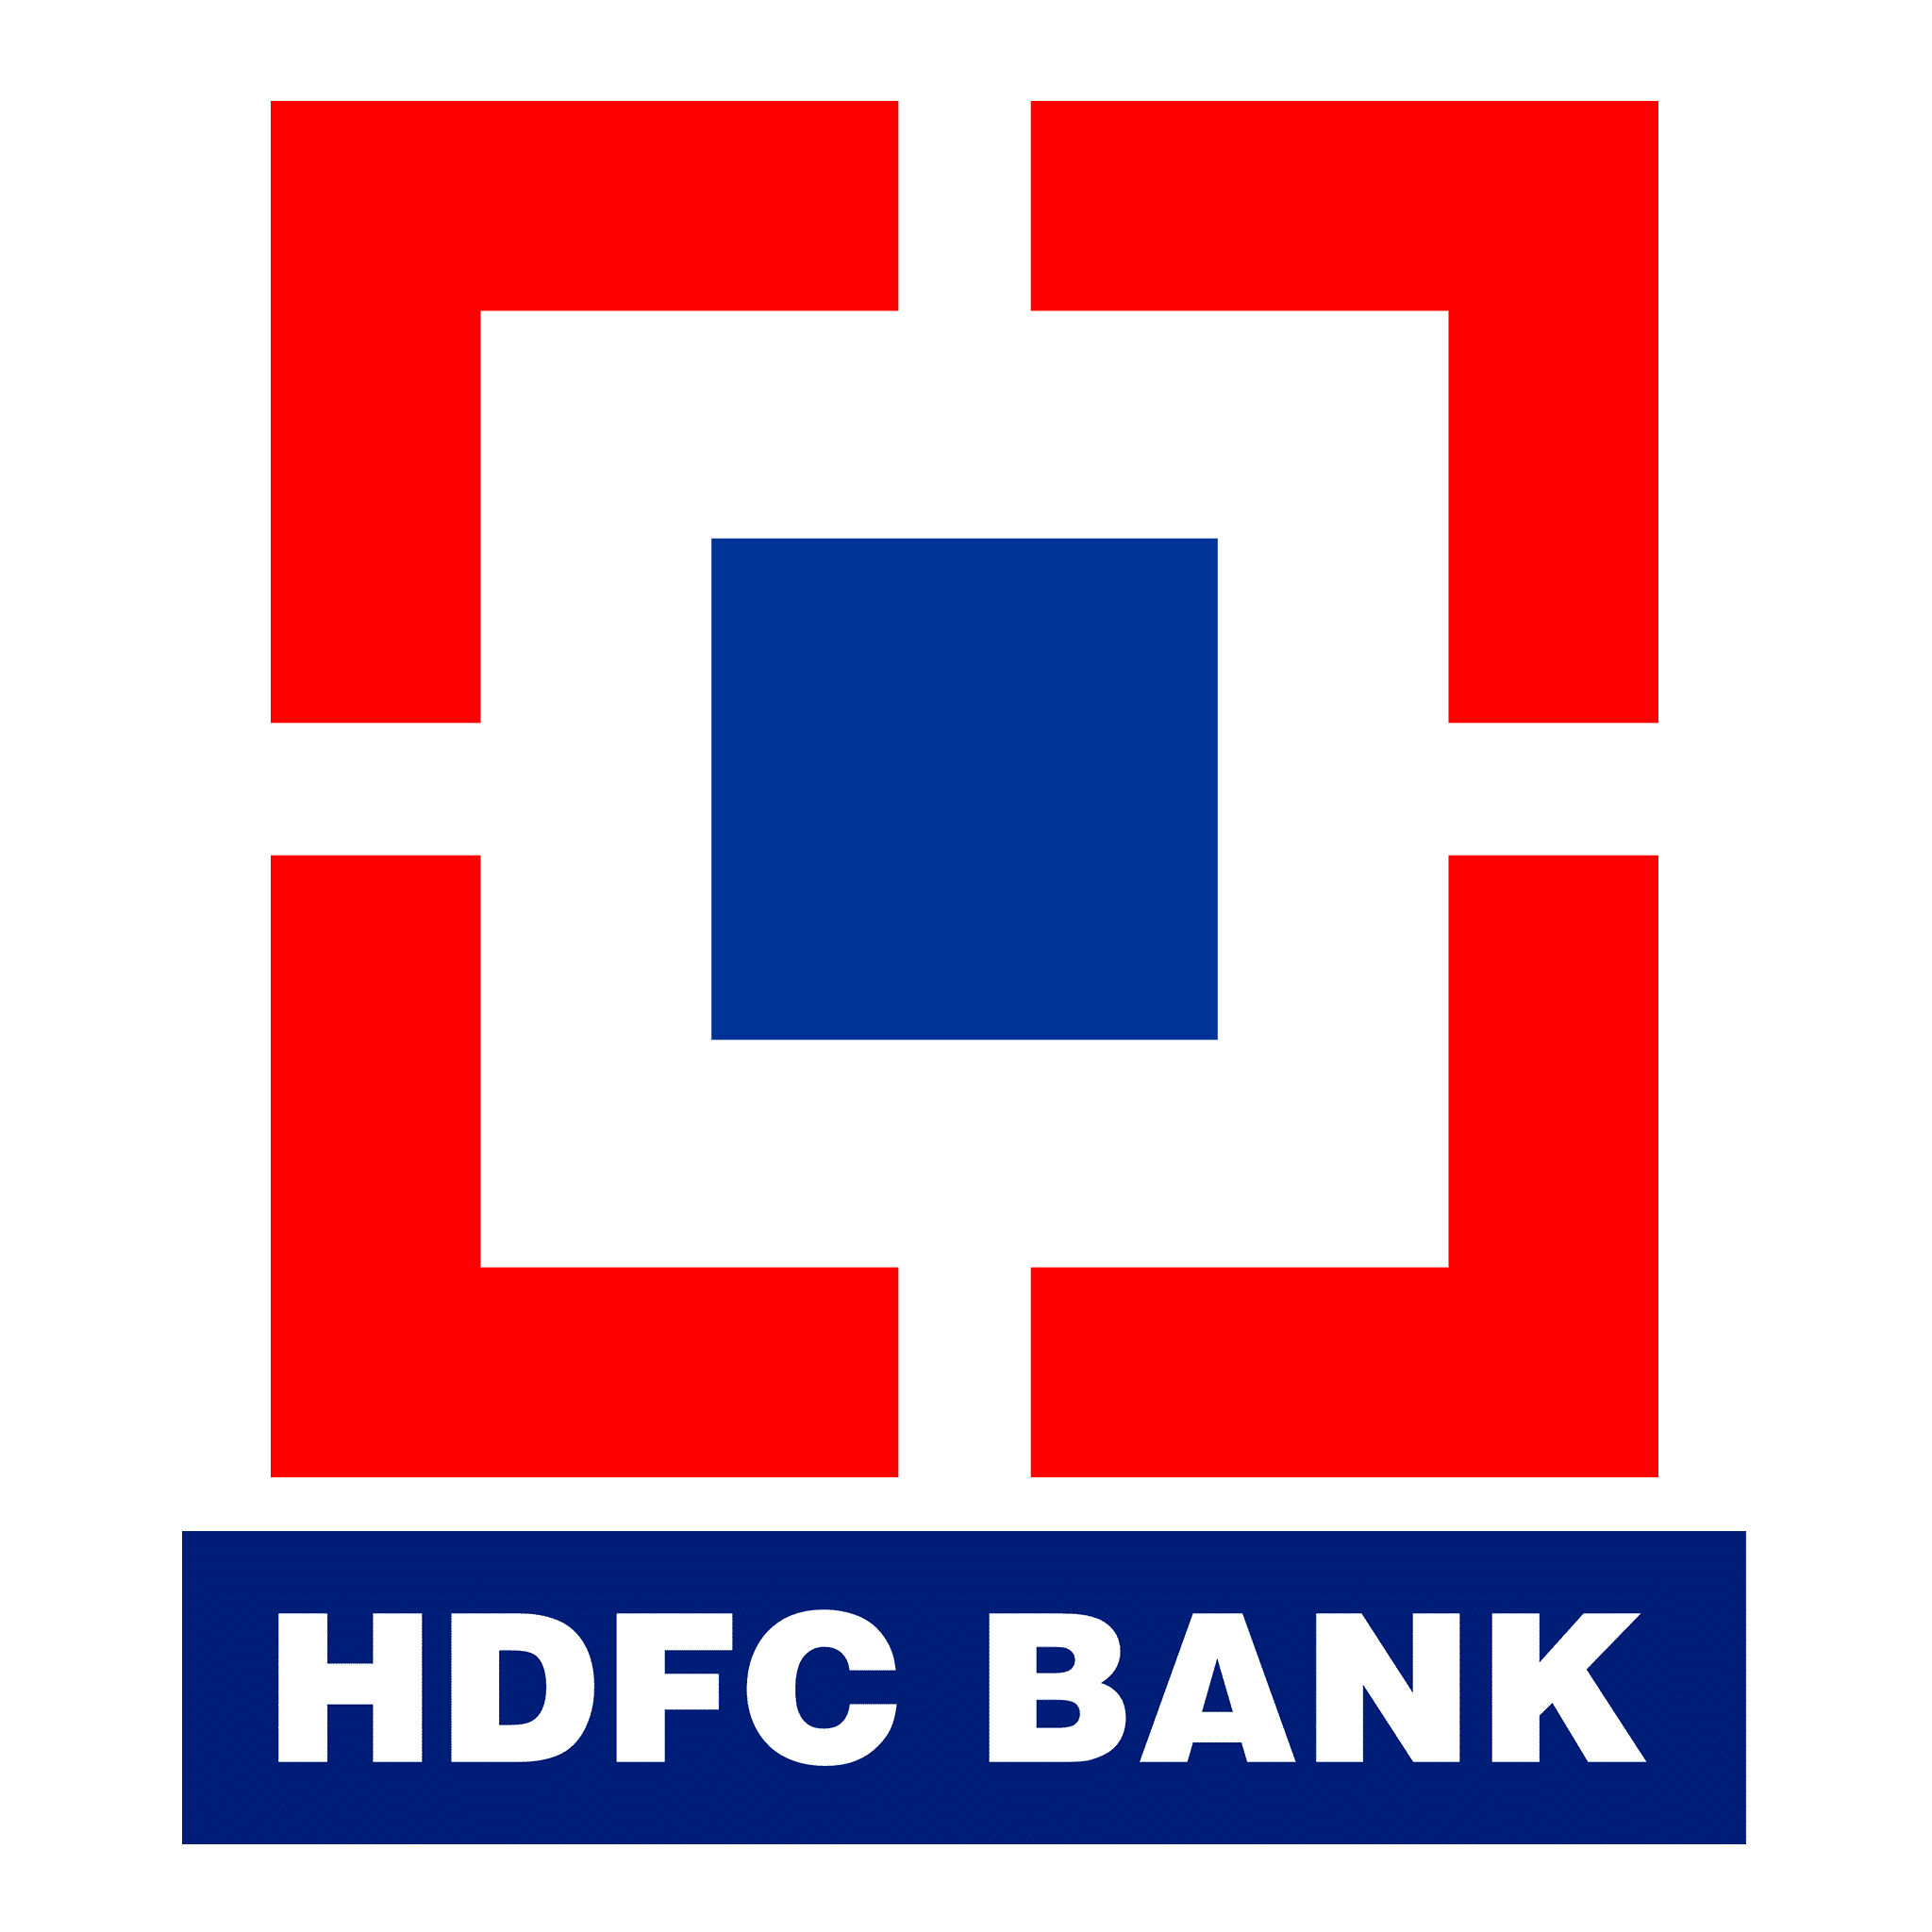 HDFC logo digital marketing company in india